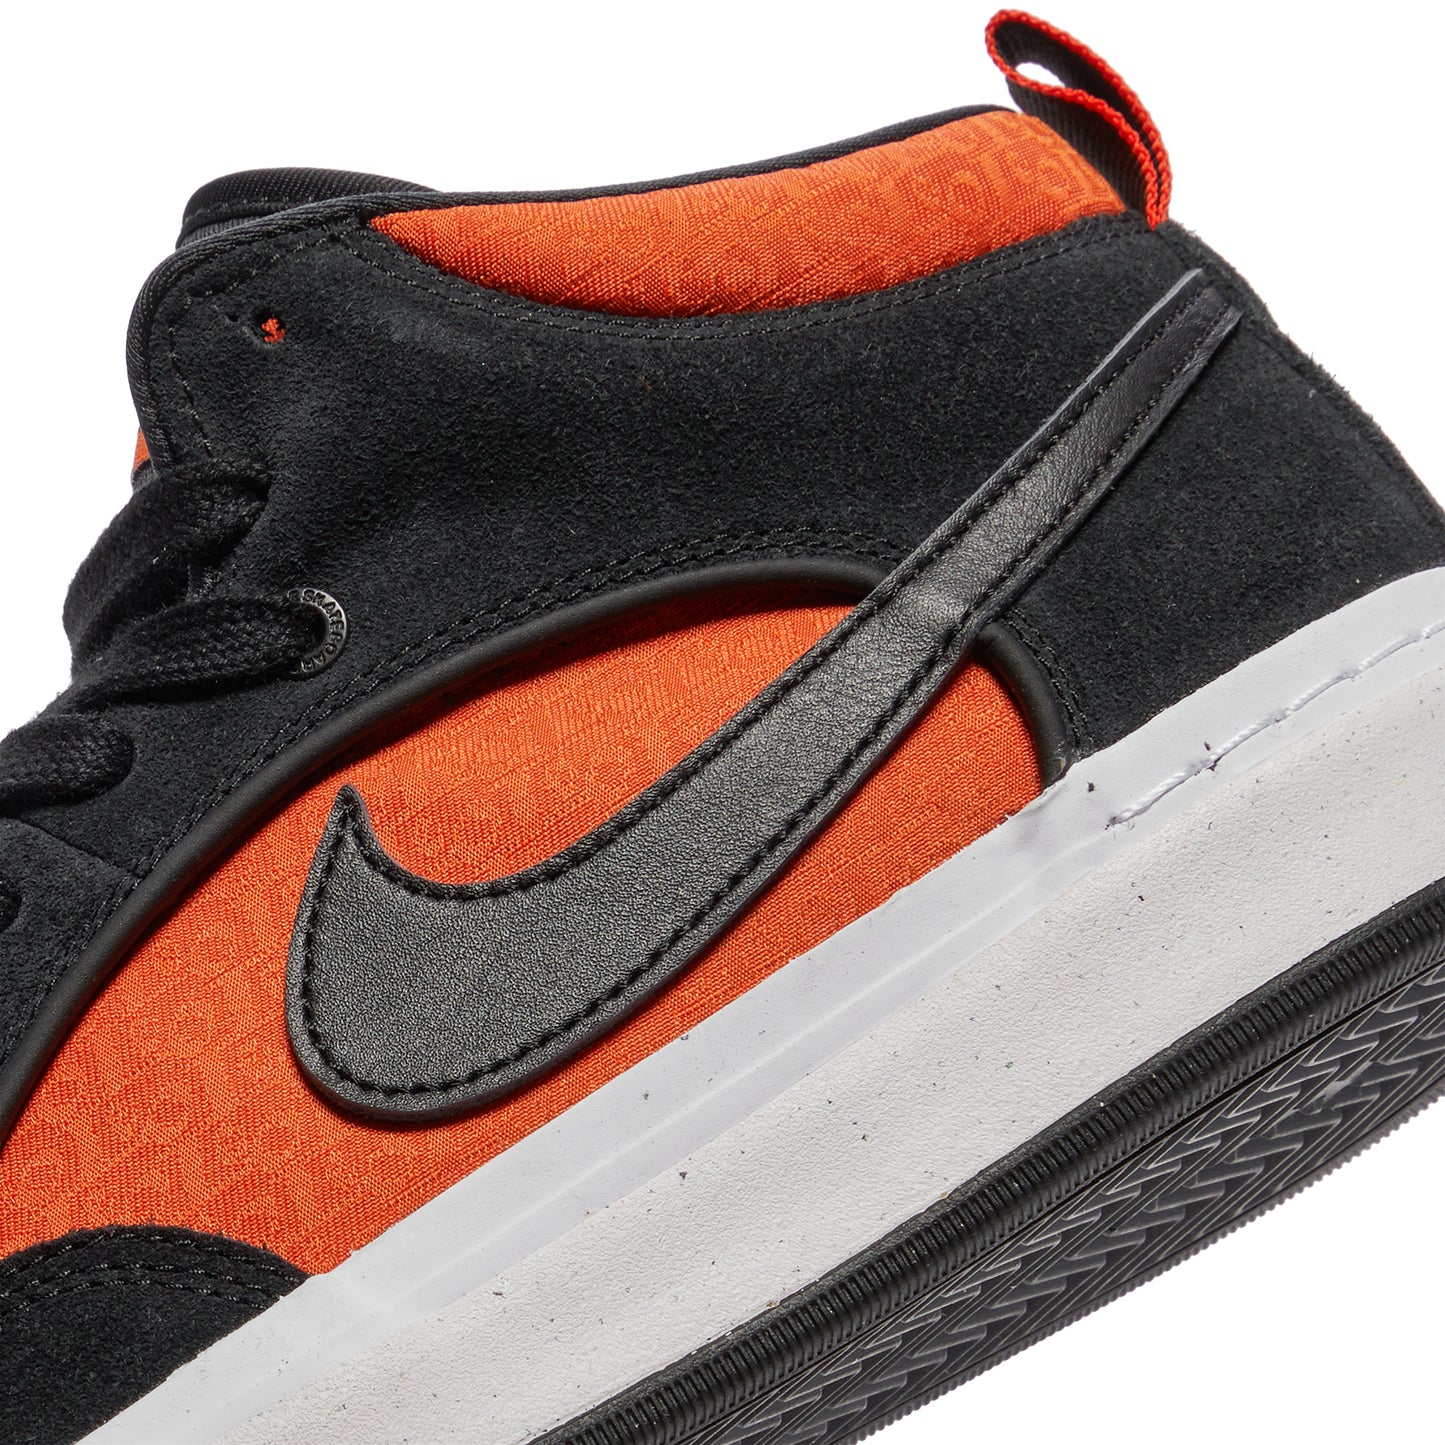 Nike SB React Leo (Black/Orange)